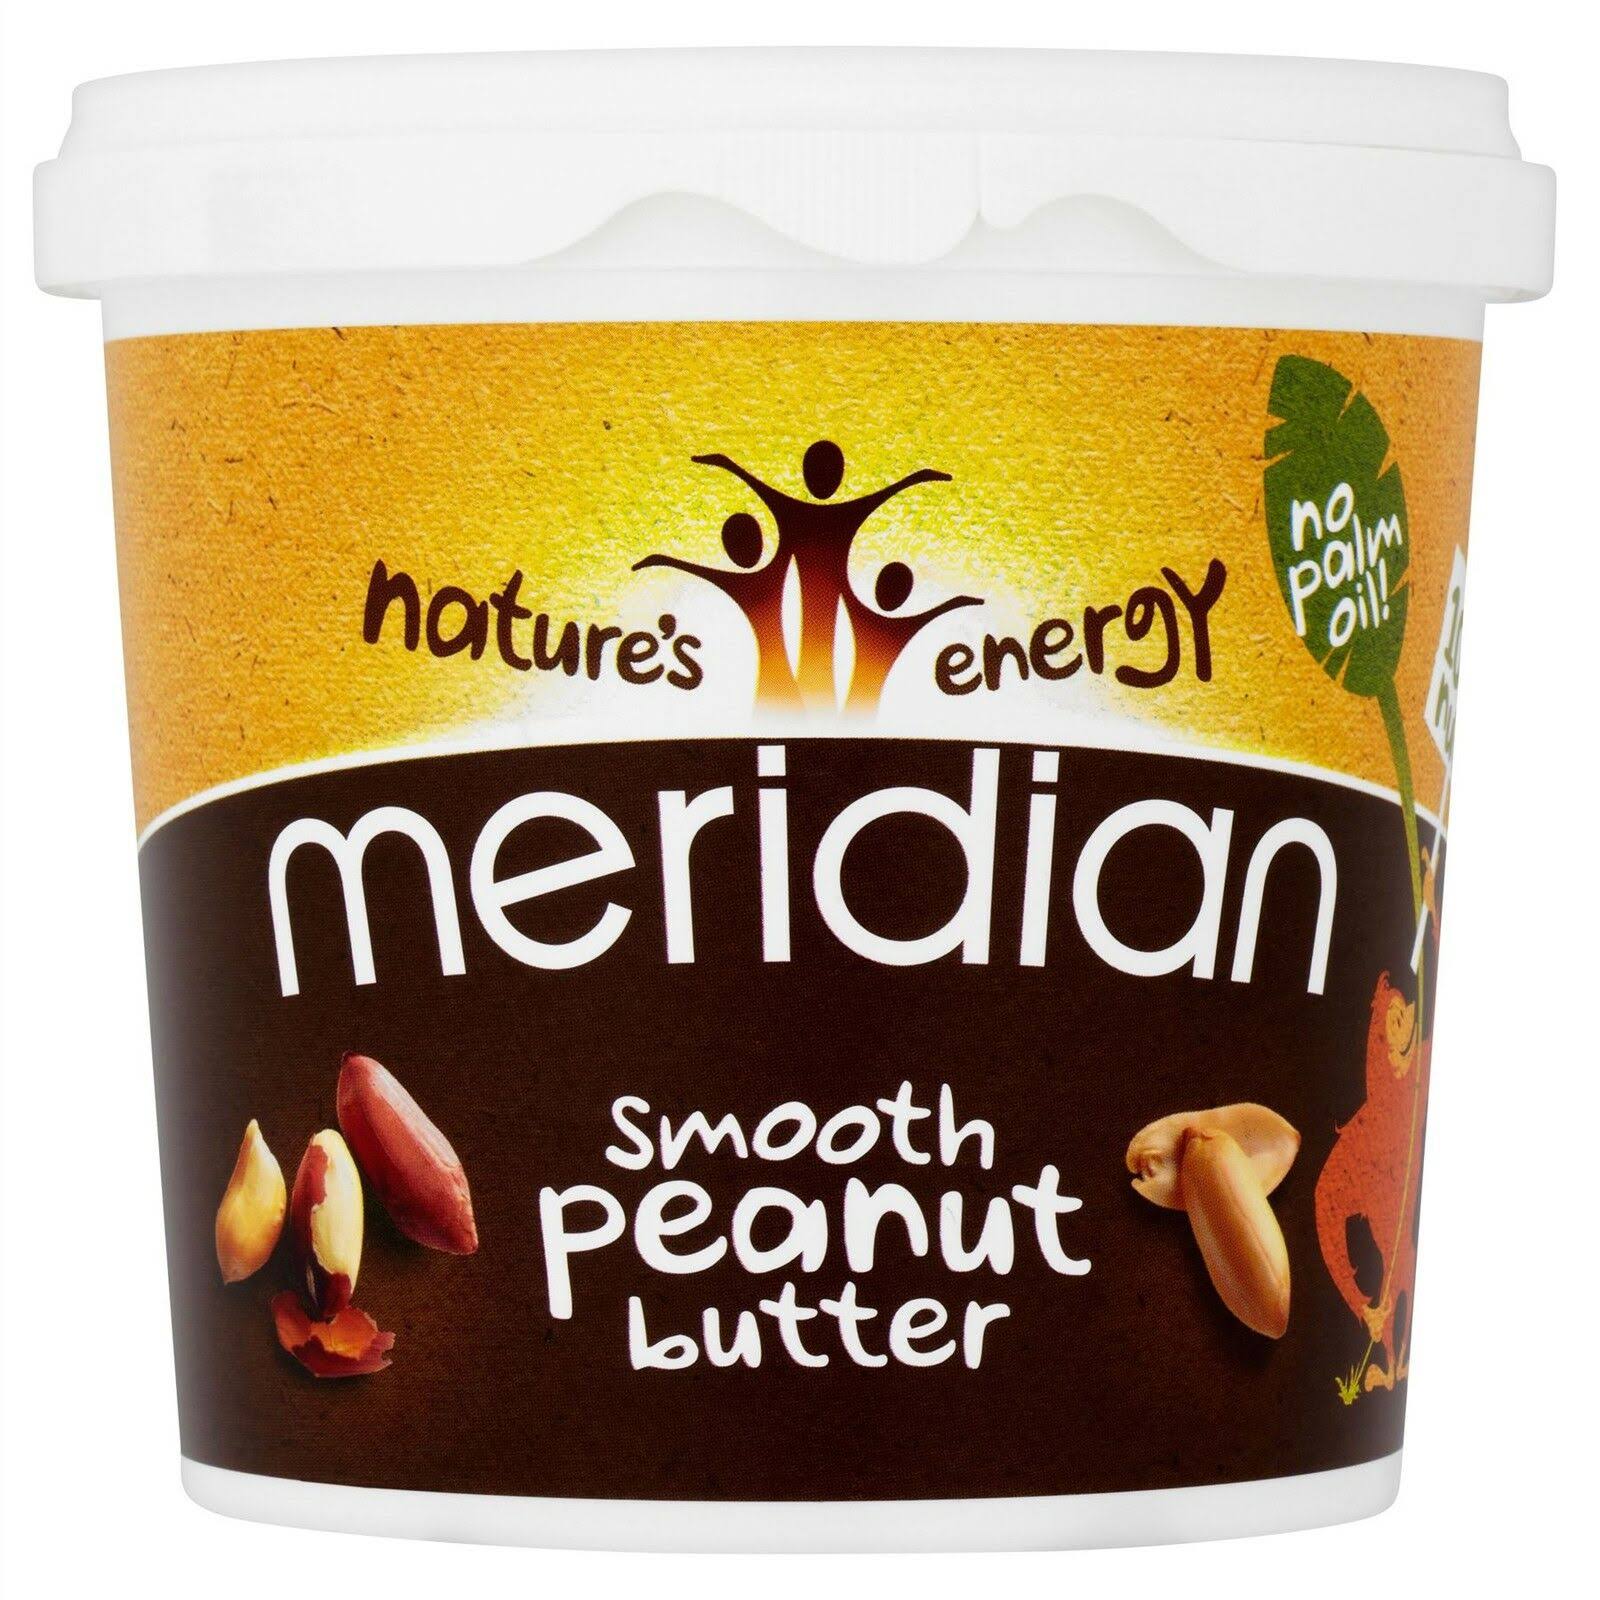 Meridian Smooth Peanut Butter - 1kg